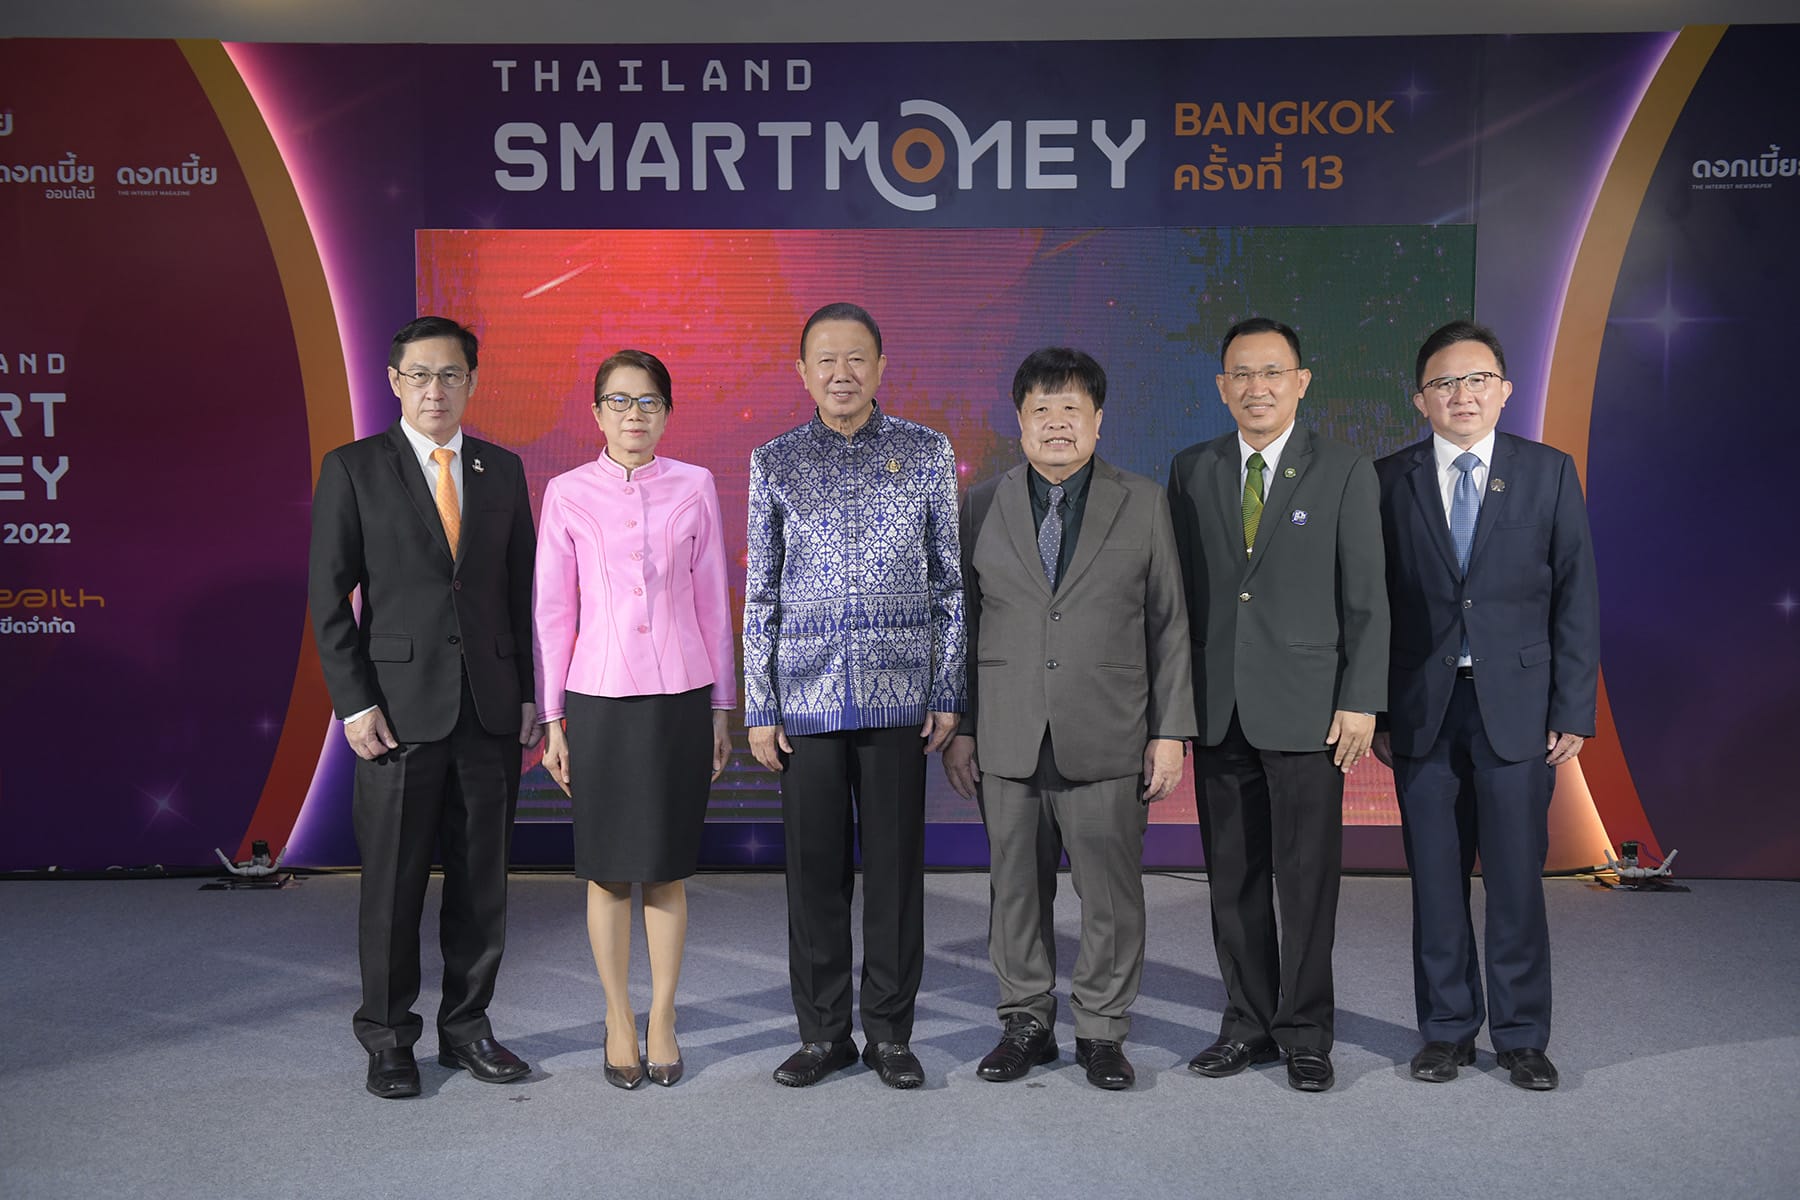 Thailand Smart Money Bangkok 2022 - 03 ThailandSmartMoneyBKK13 09Dec ผู้บริหาร - ภาพที่ 1